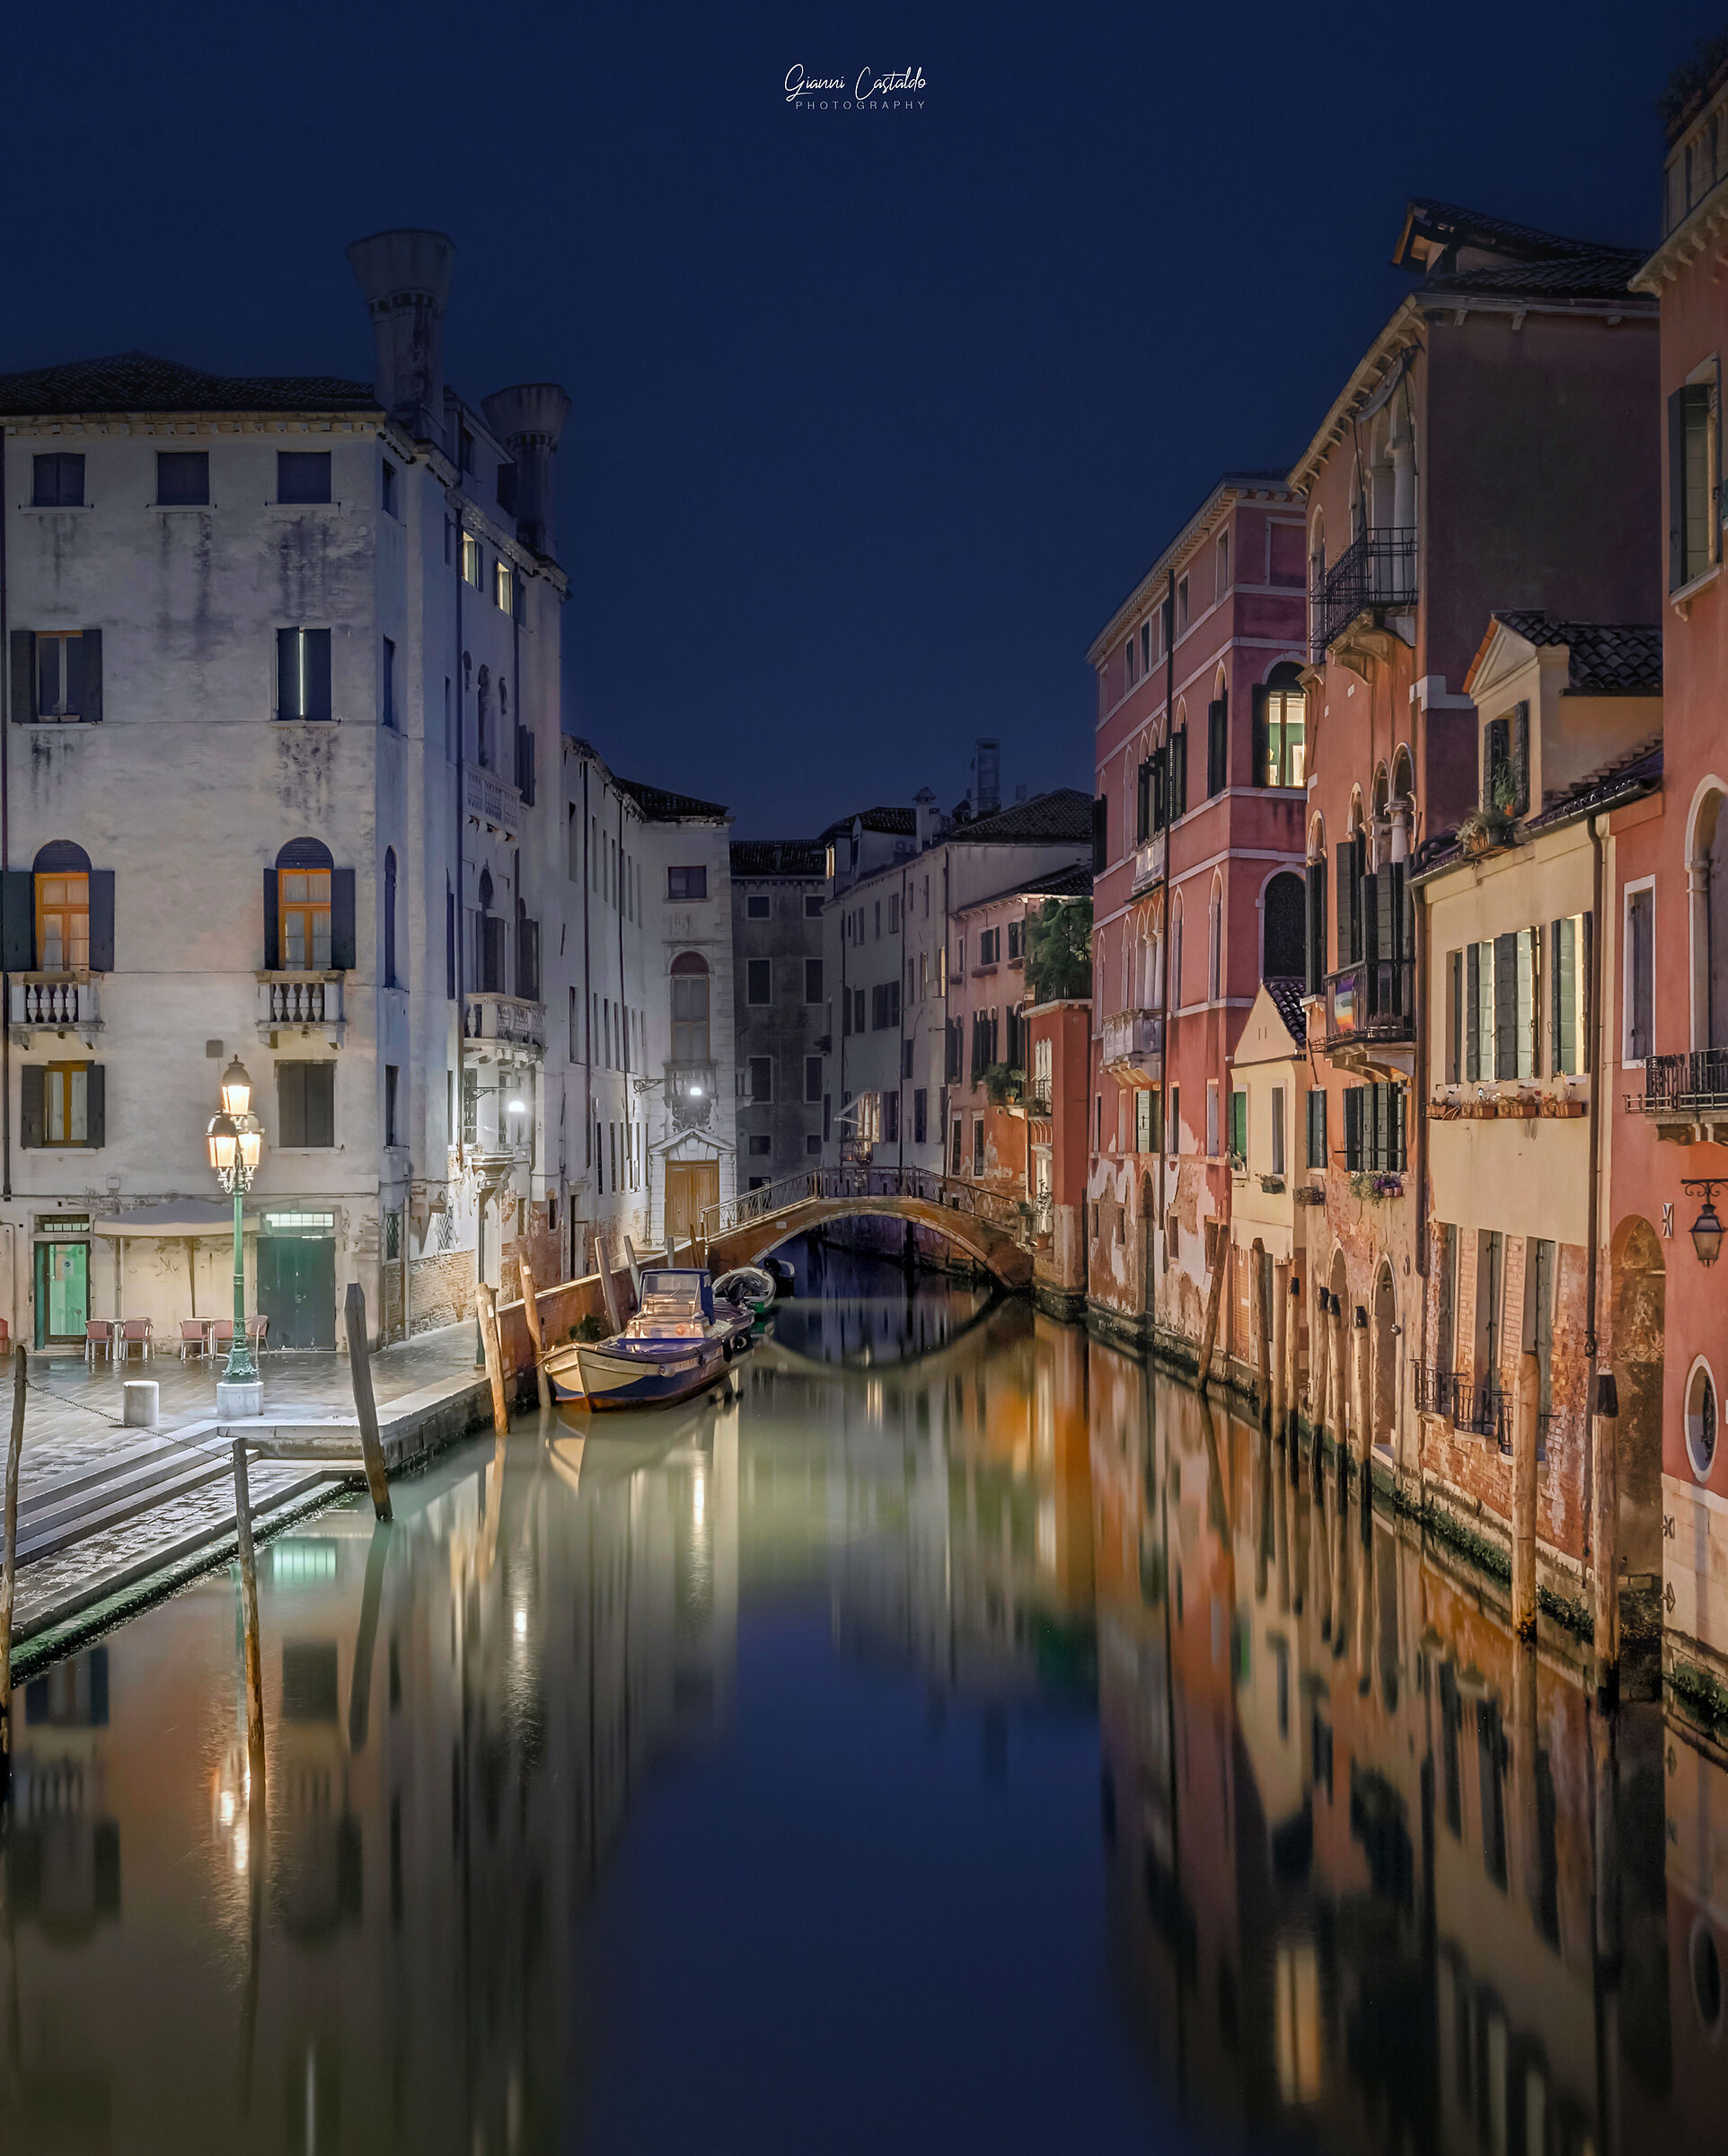 Between canals of Venice...